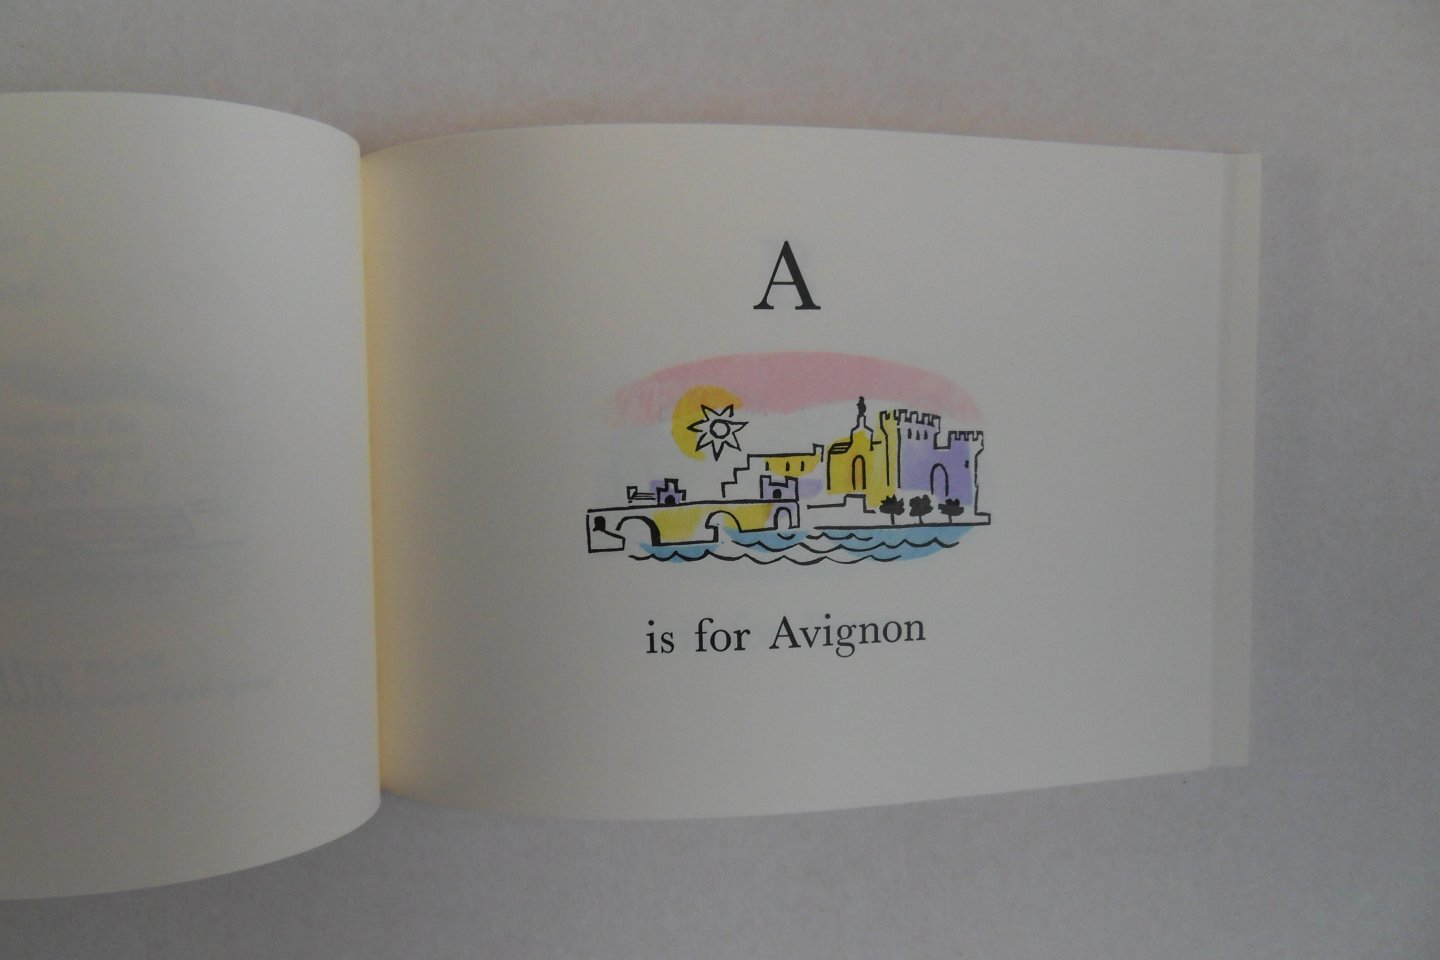 Allen, Peter. - An ABC Tour About France.- With pochoir illustrations. [ genummerd ex. 284 / 500 ].